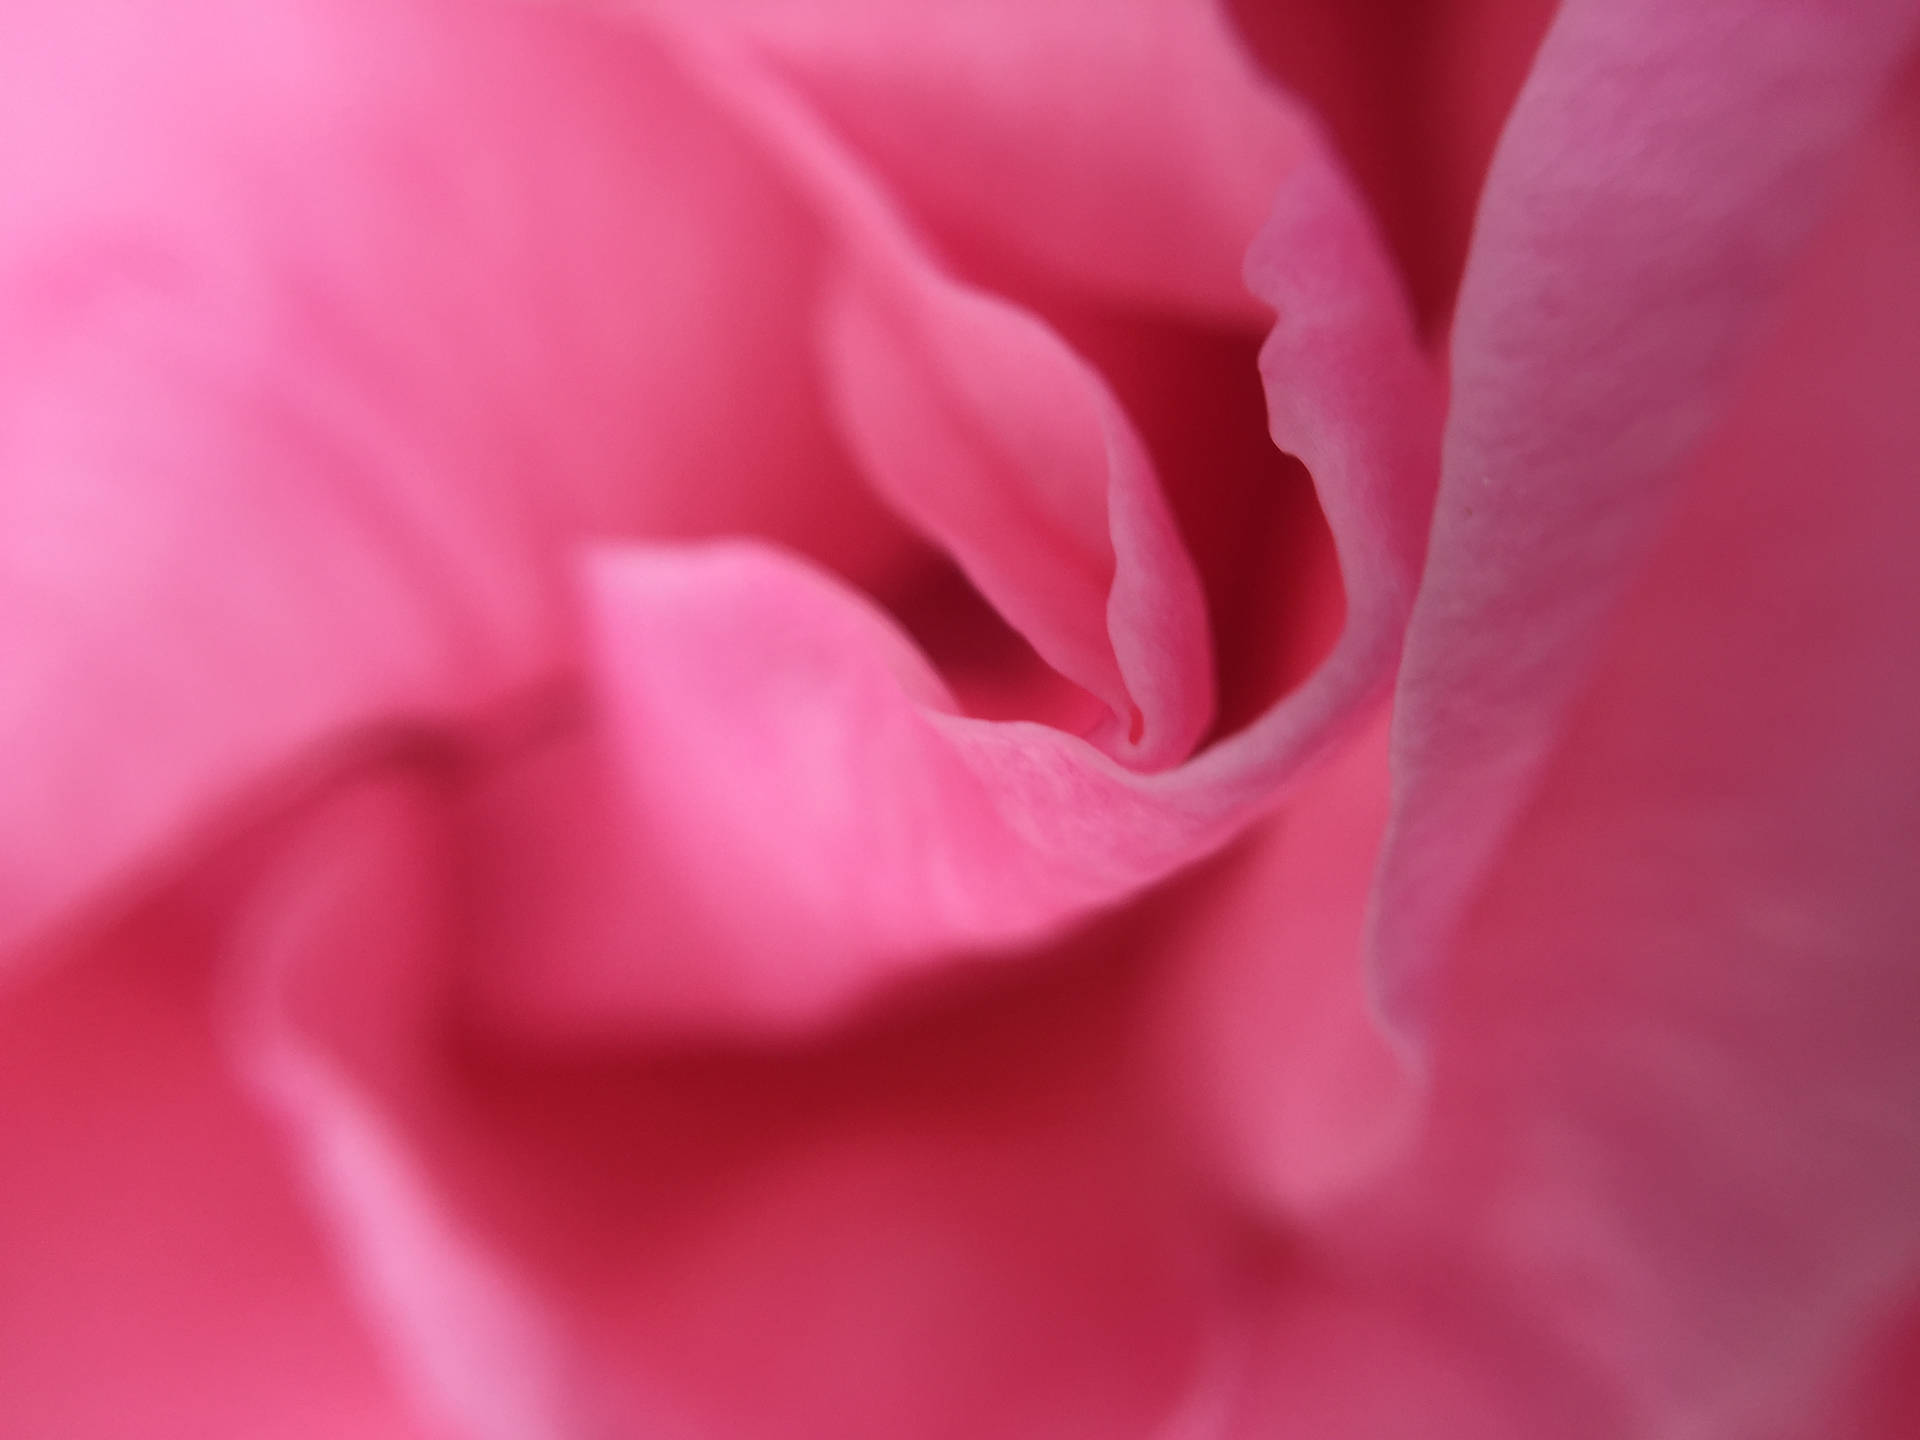 Dejlig Pink Rose Iphone Wallpaper